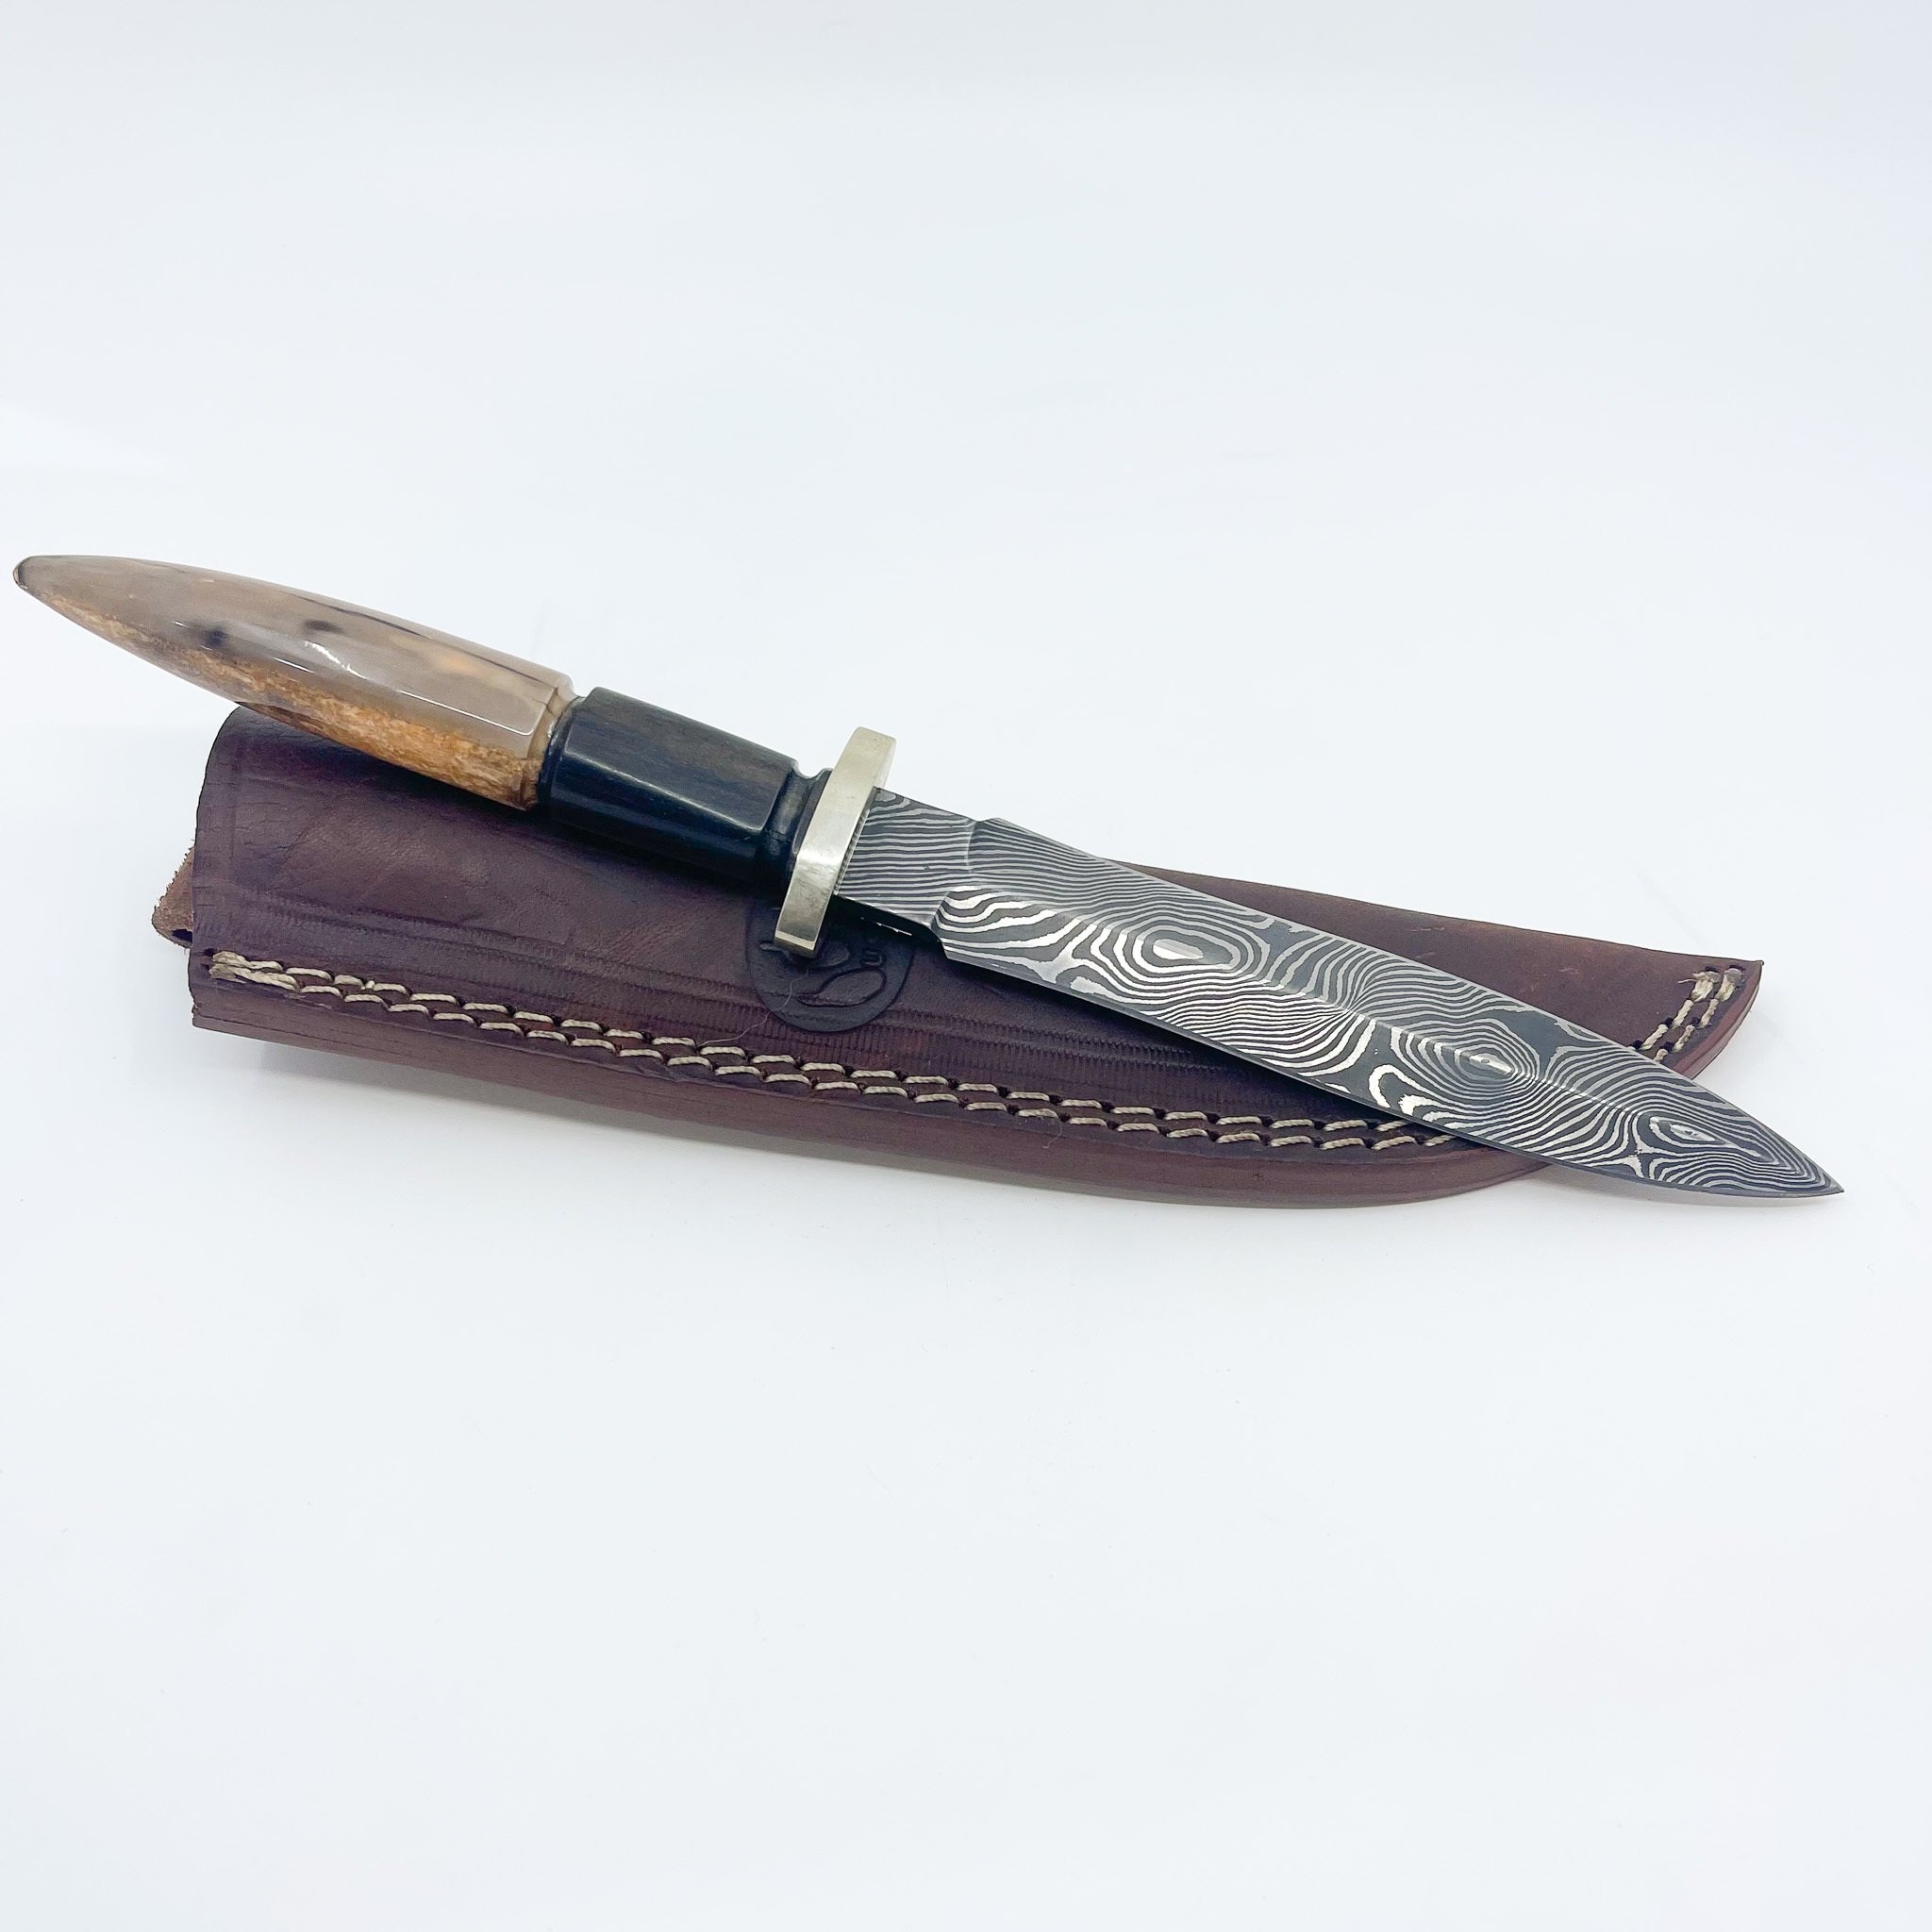 Damascus Steel Dagger with Sheath